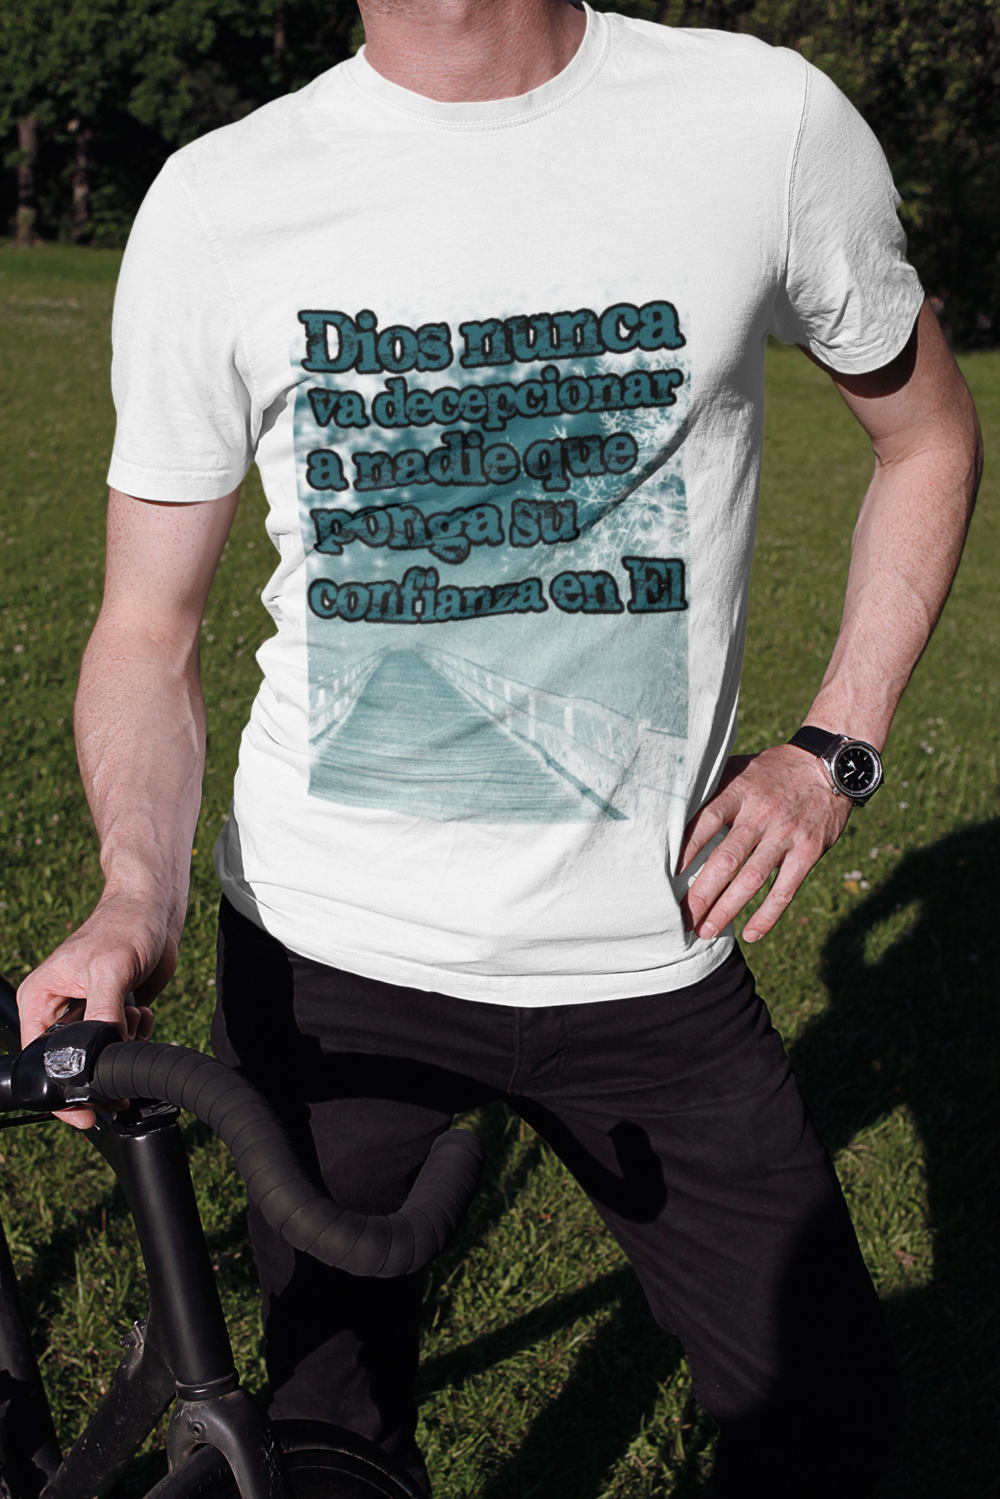 t shirt mockup of a man posing with his bicycle 2017 el1 1